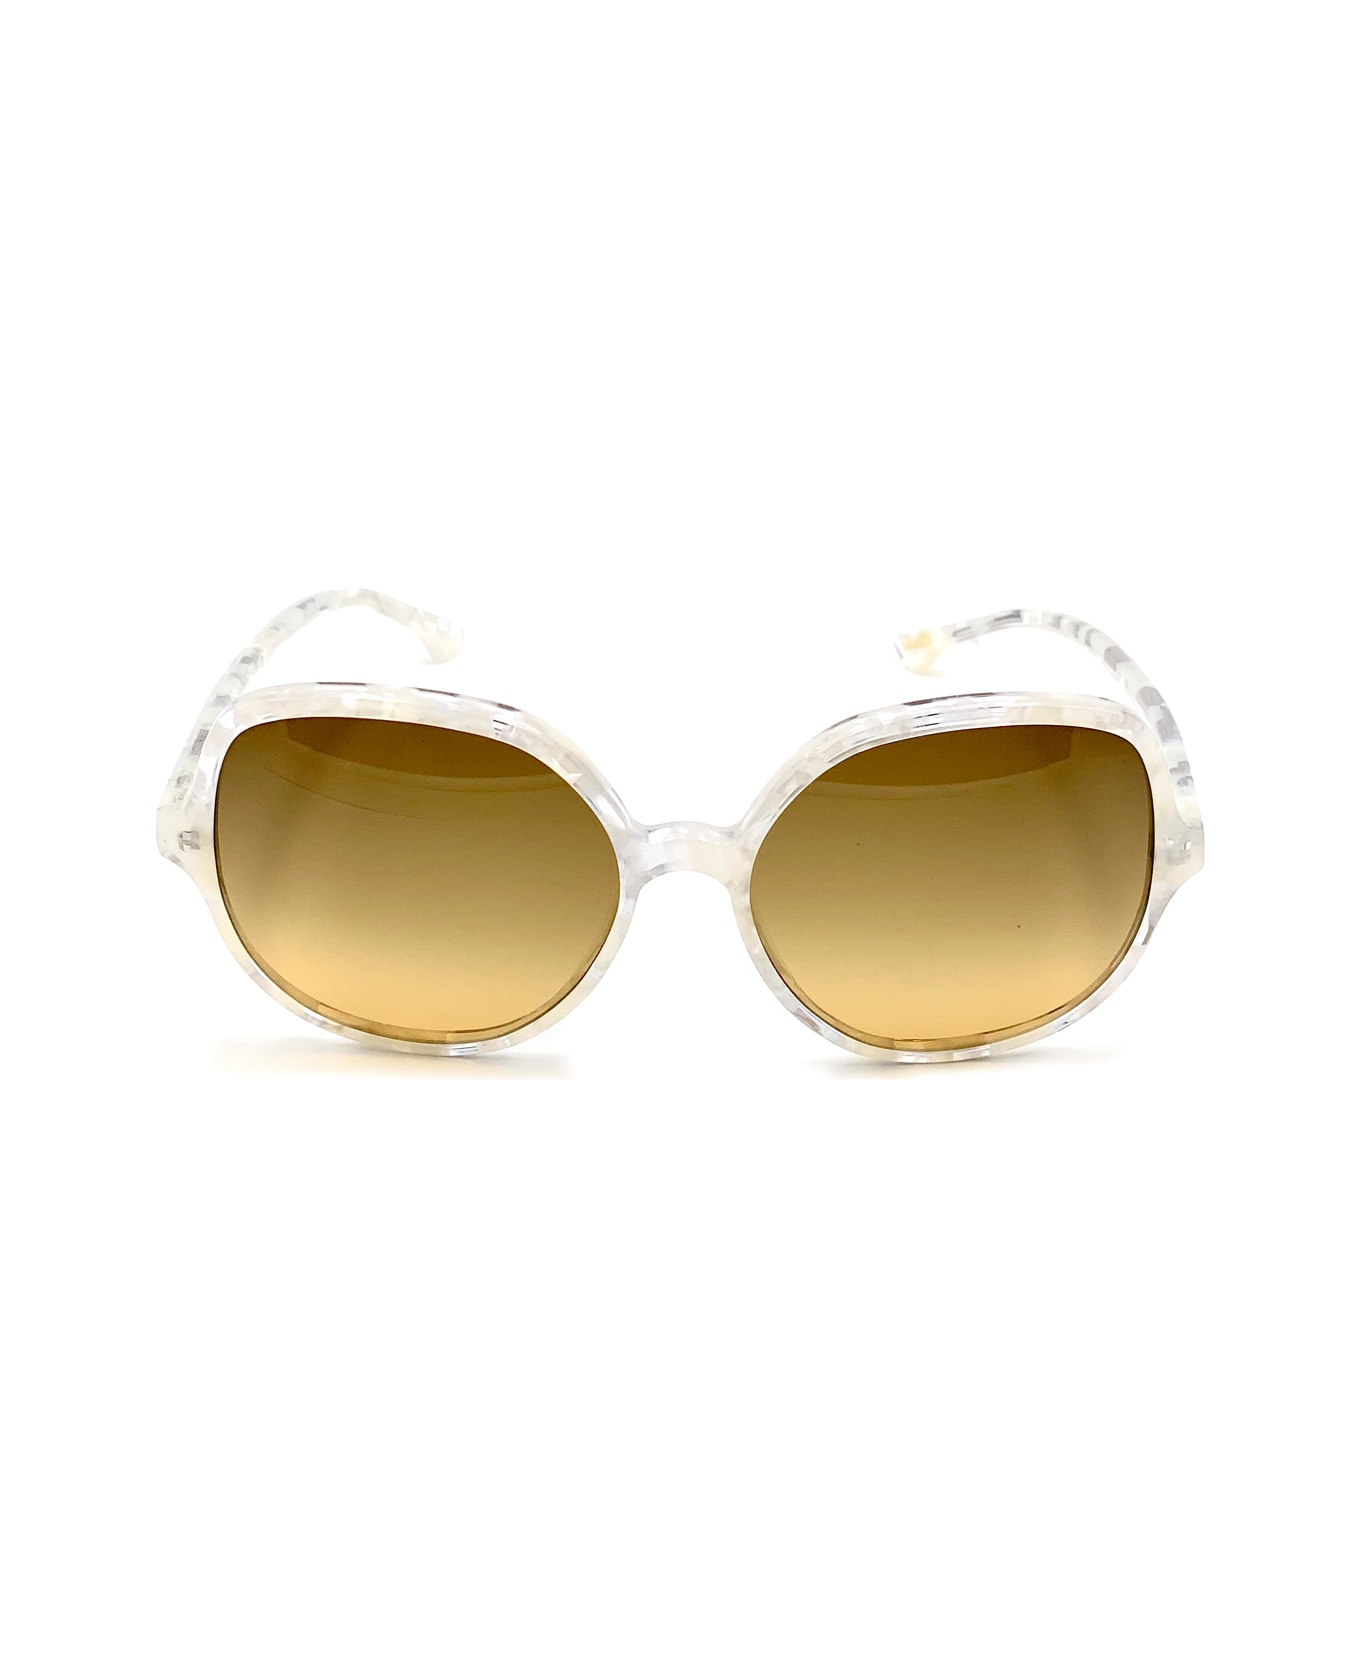 Silvian Heach Drag C661 Sunglasses - Avorio サングラス